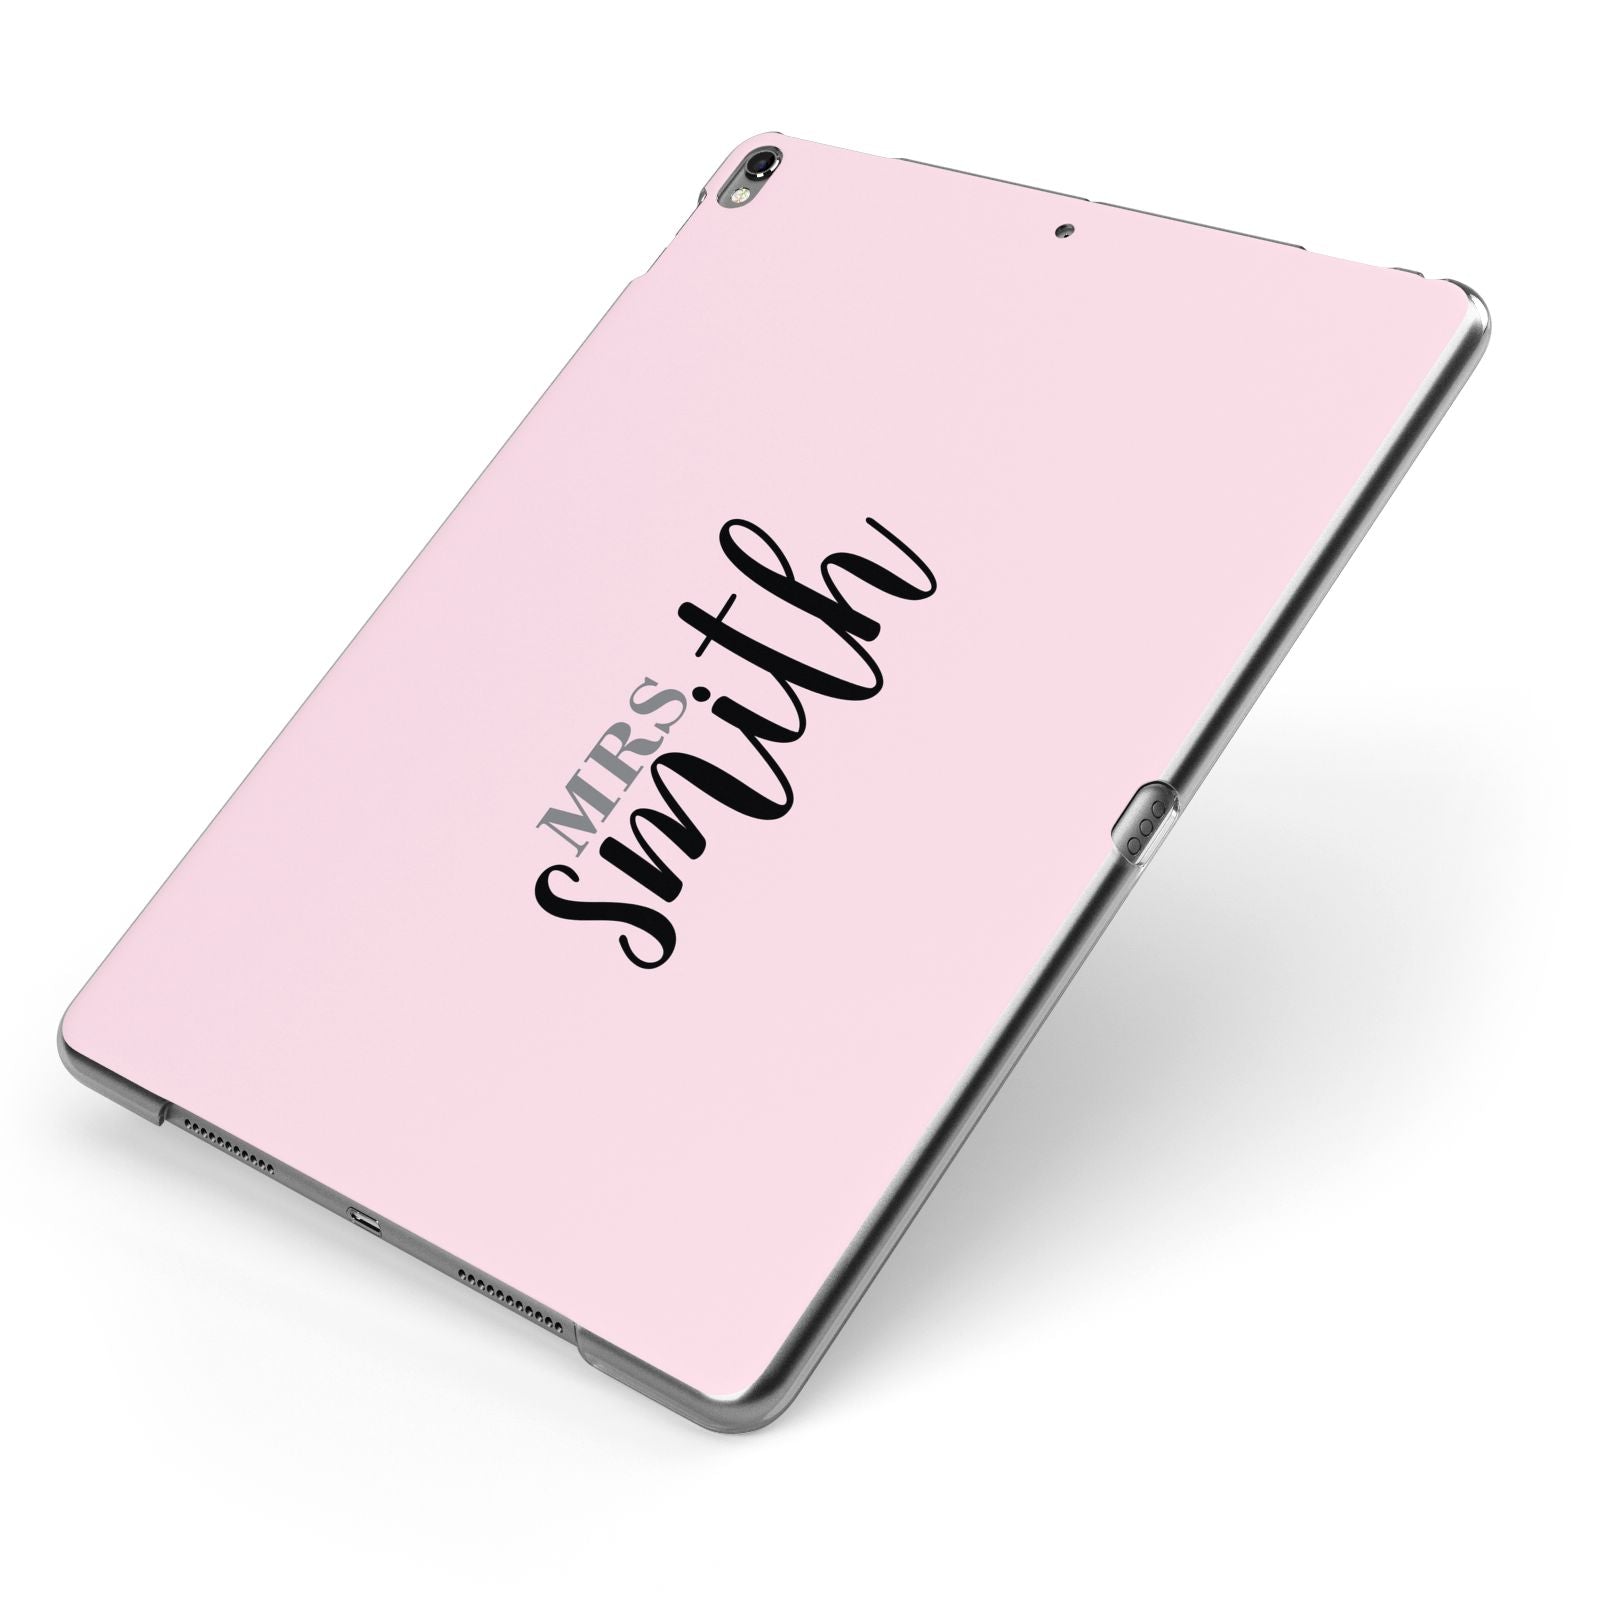 Personalised Bridal Apple iPad Case on Grey iPad Side View